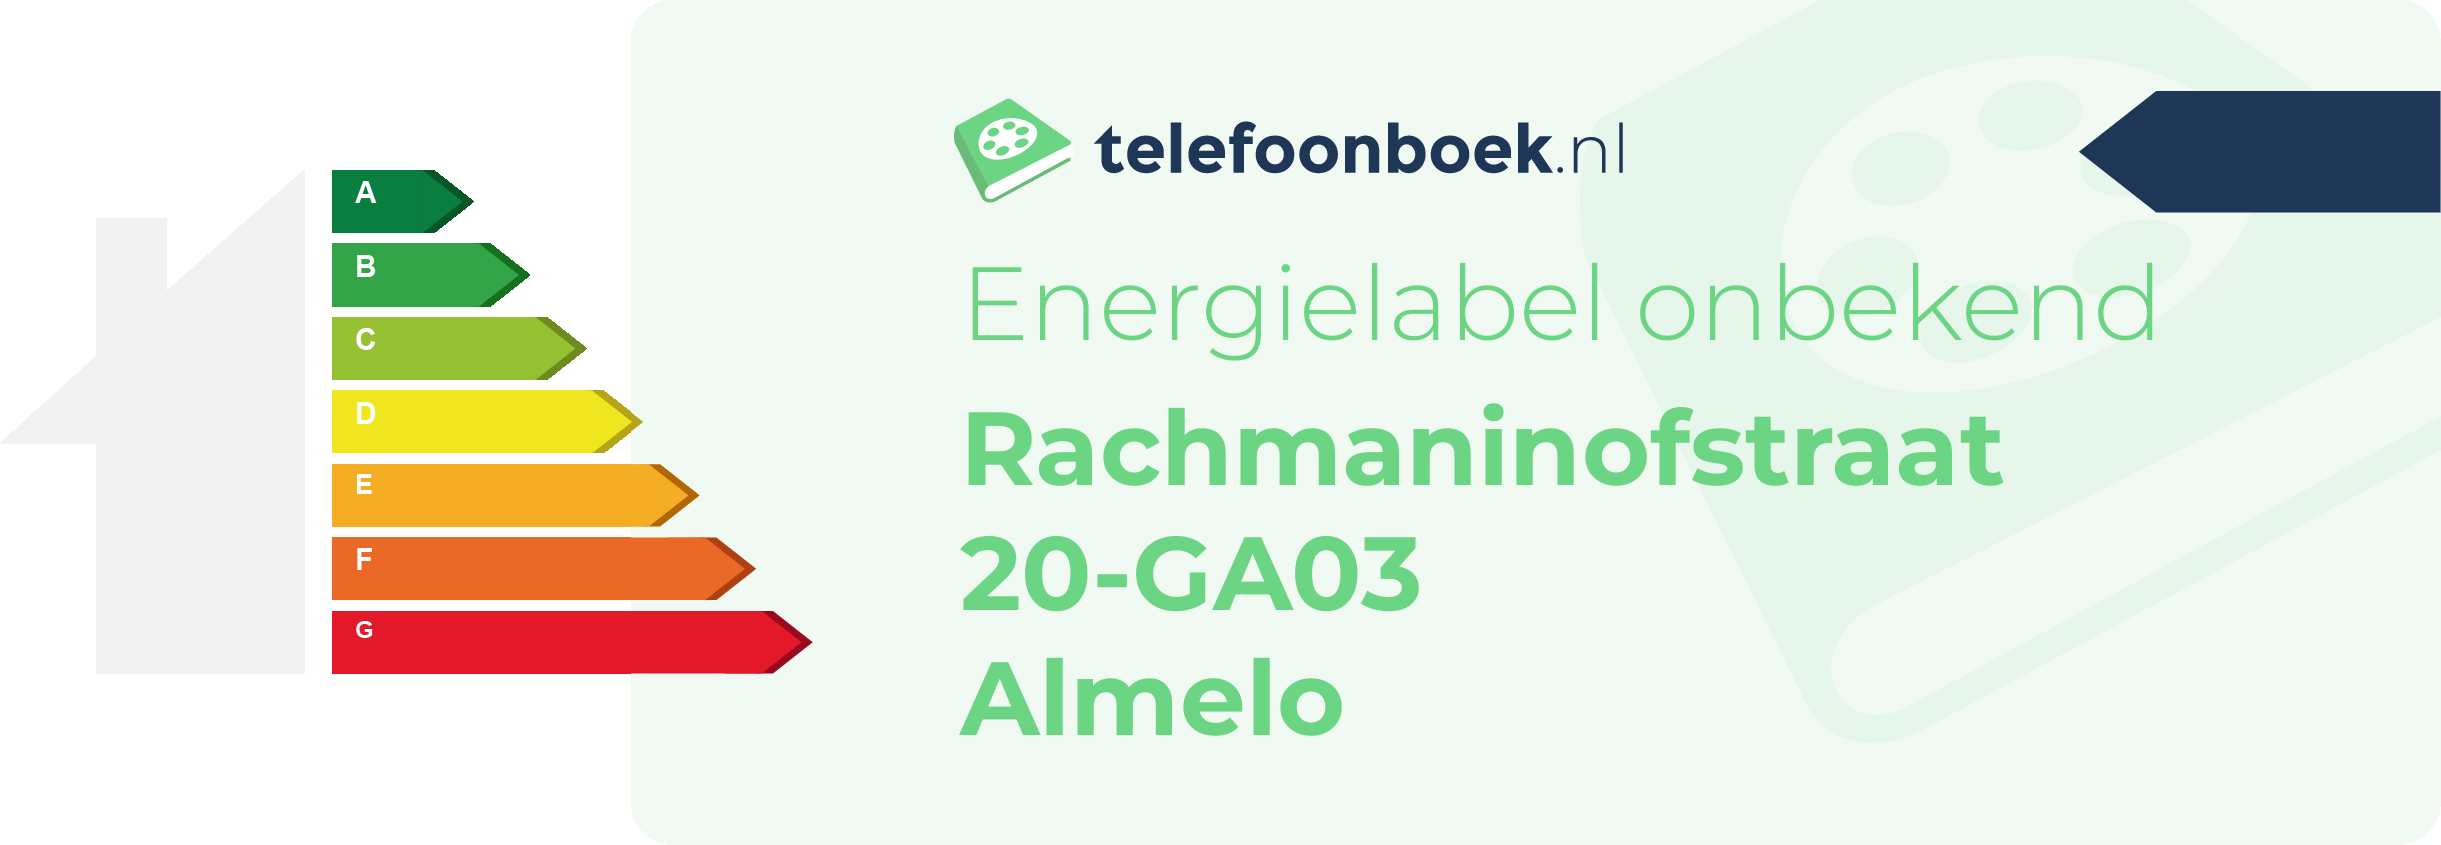 Energielabel Rachmaninofstraat 20-GA03 Almelo